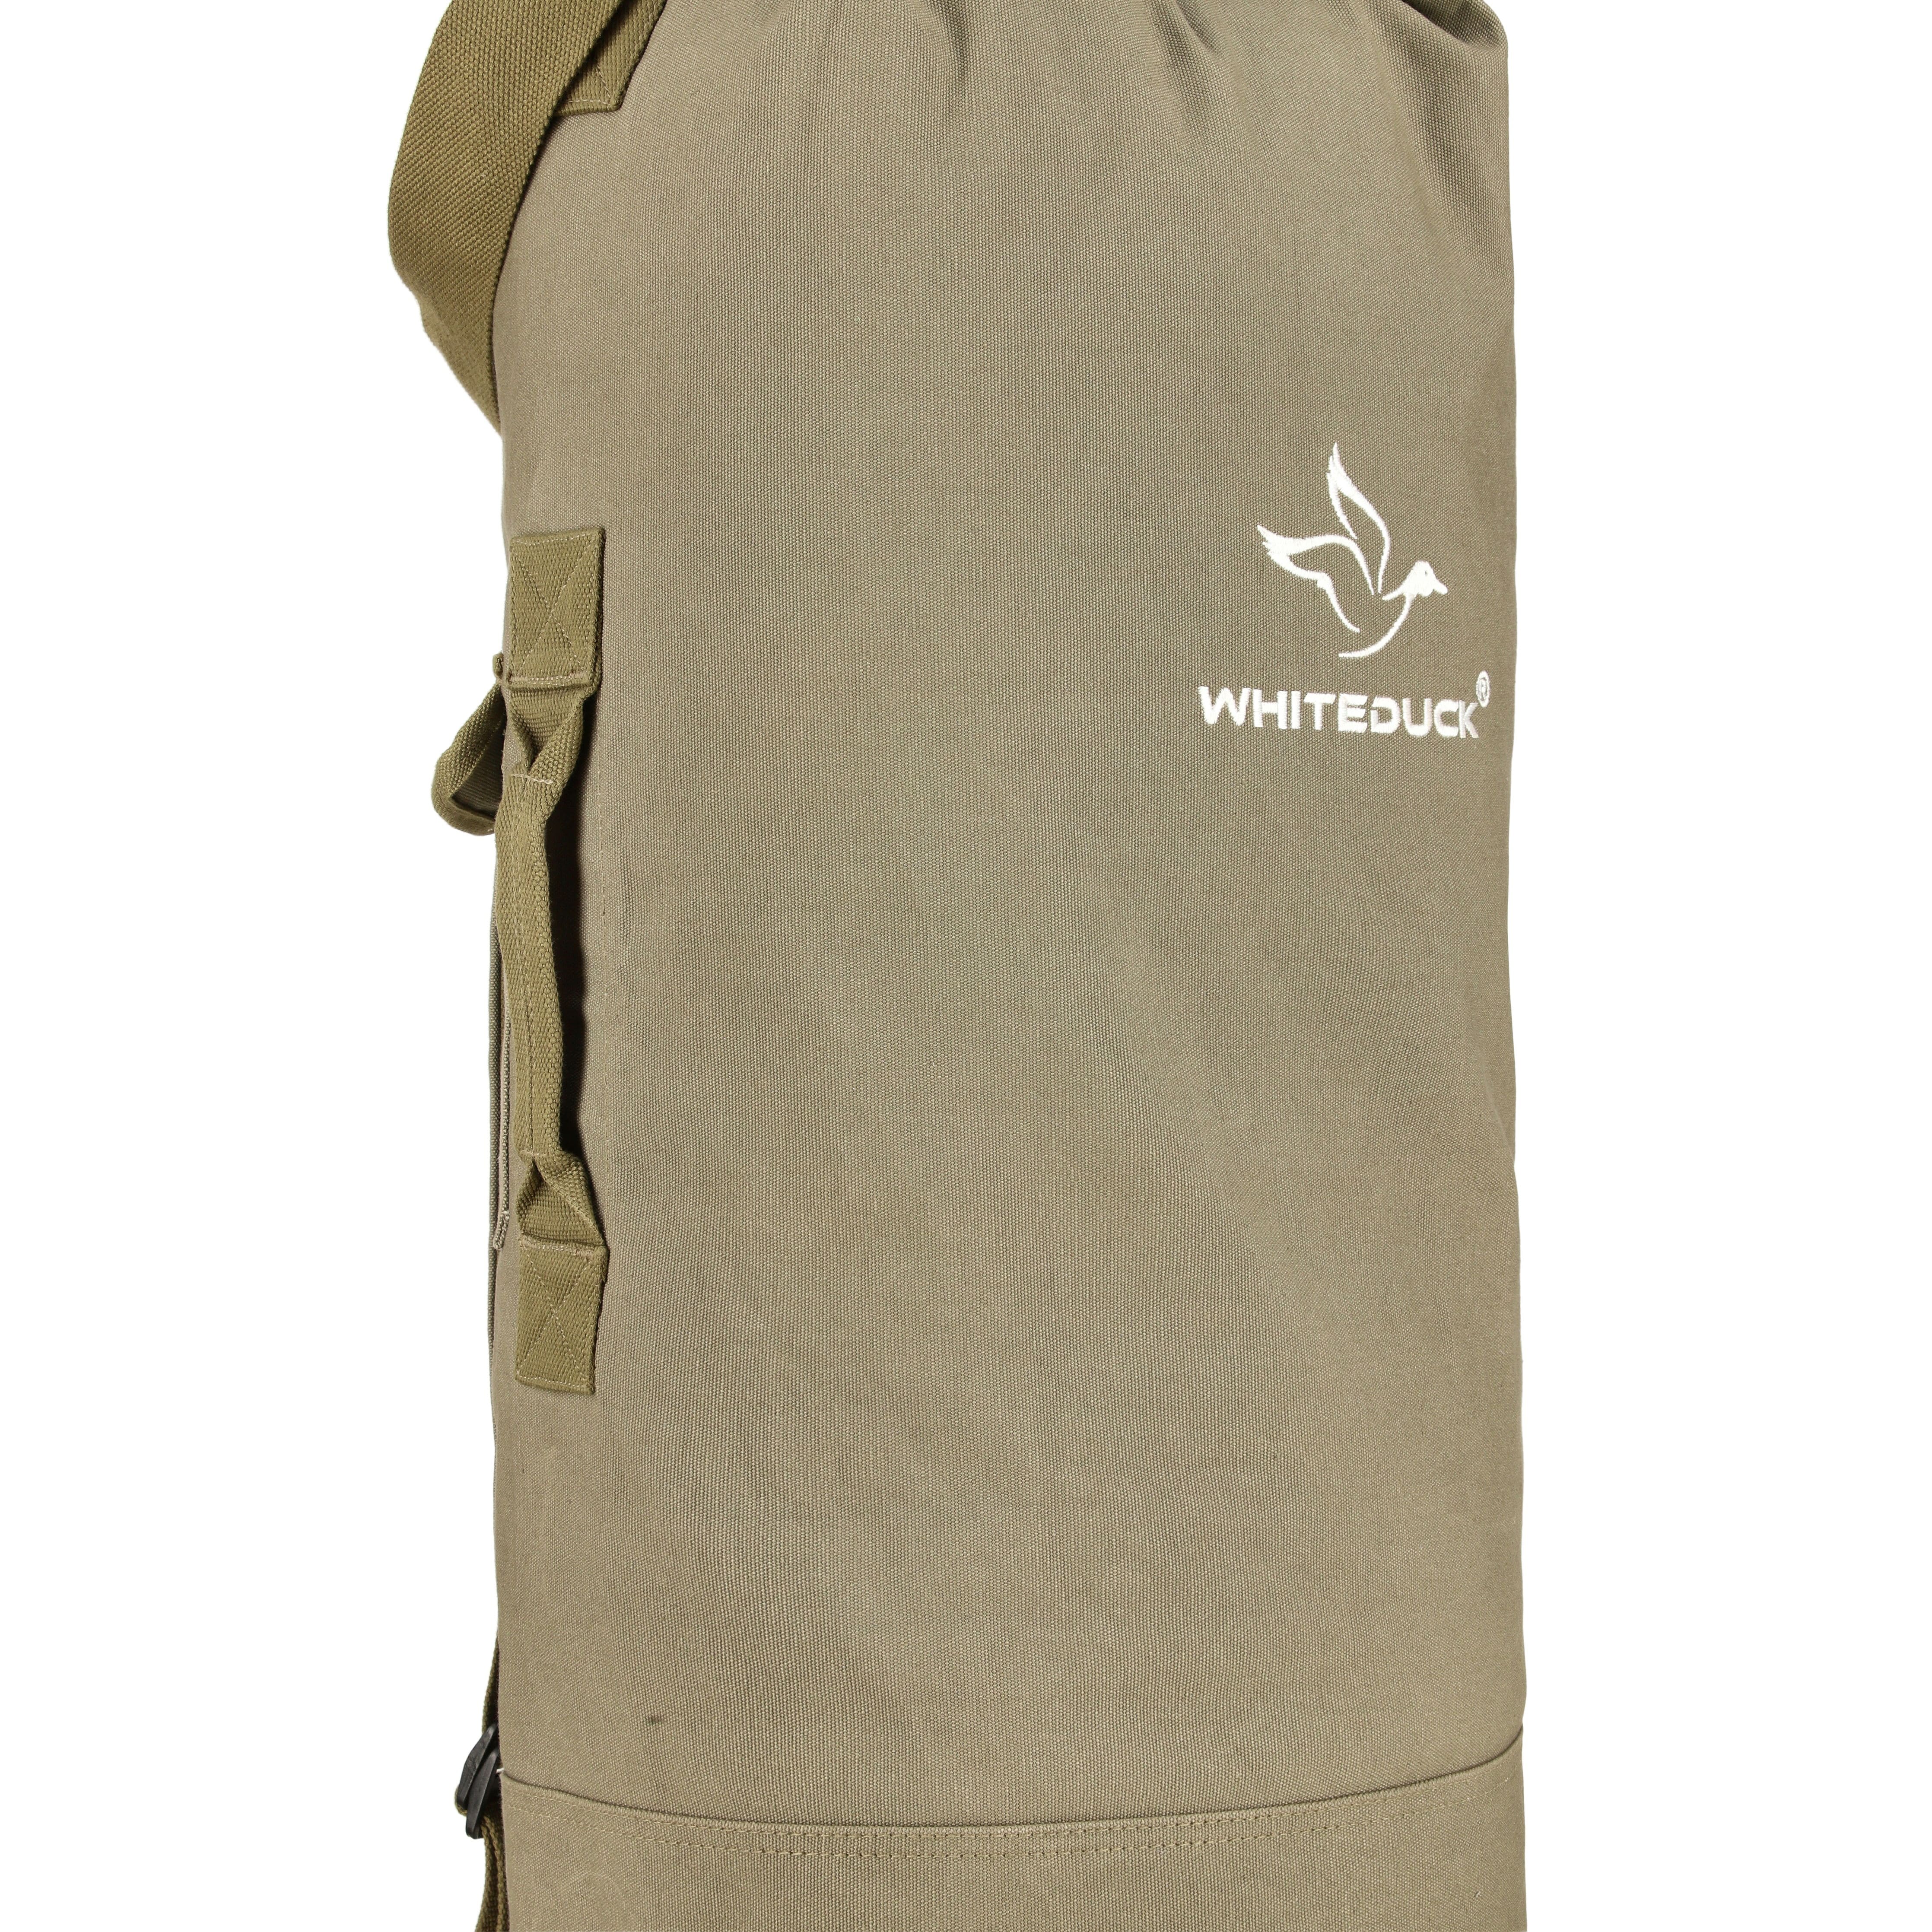 White Duck Outdoors Hoplite Top Load Bag